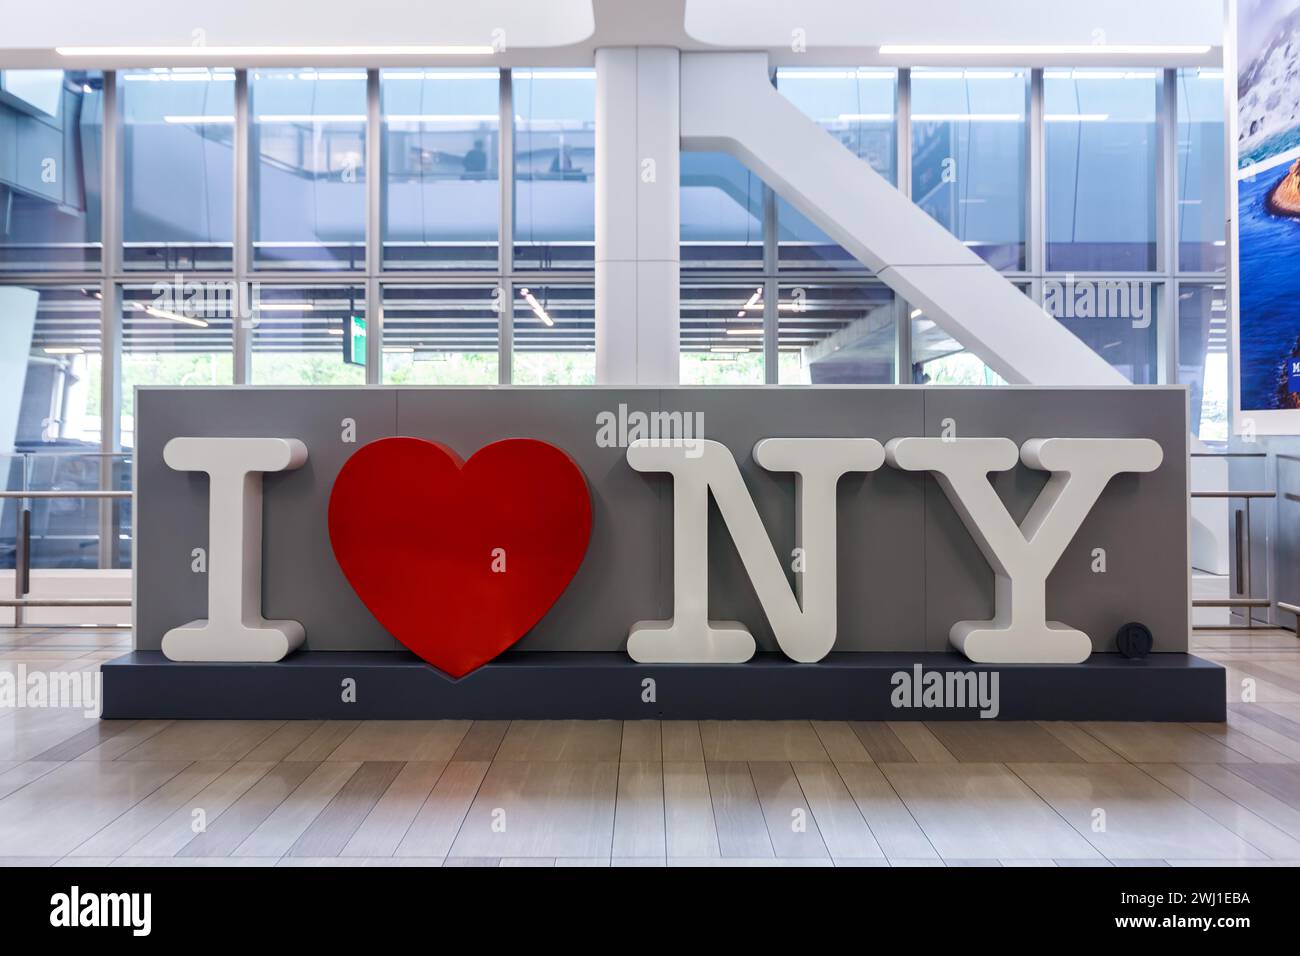 I Love NY sign at LaGuardia Airport in New York, USA Stock Photo